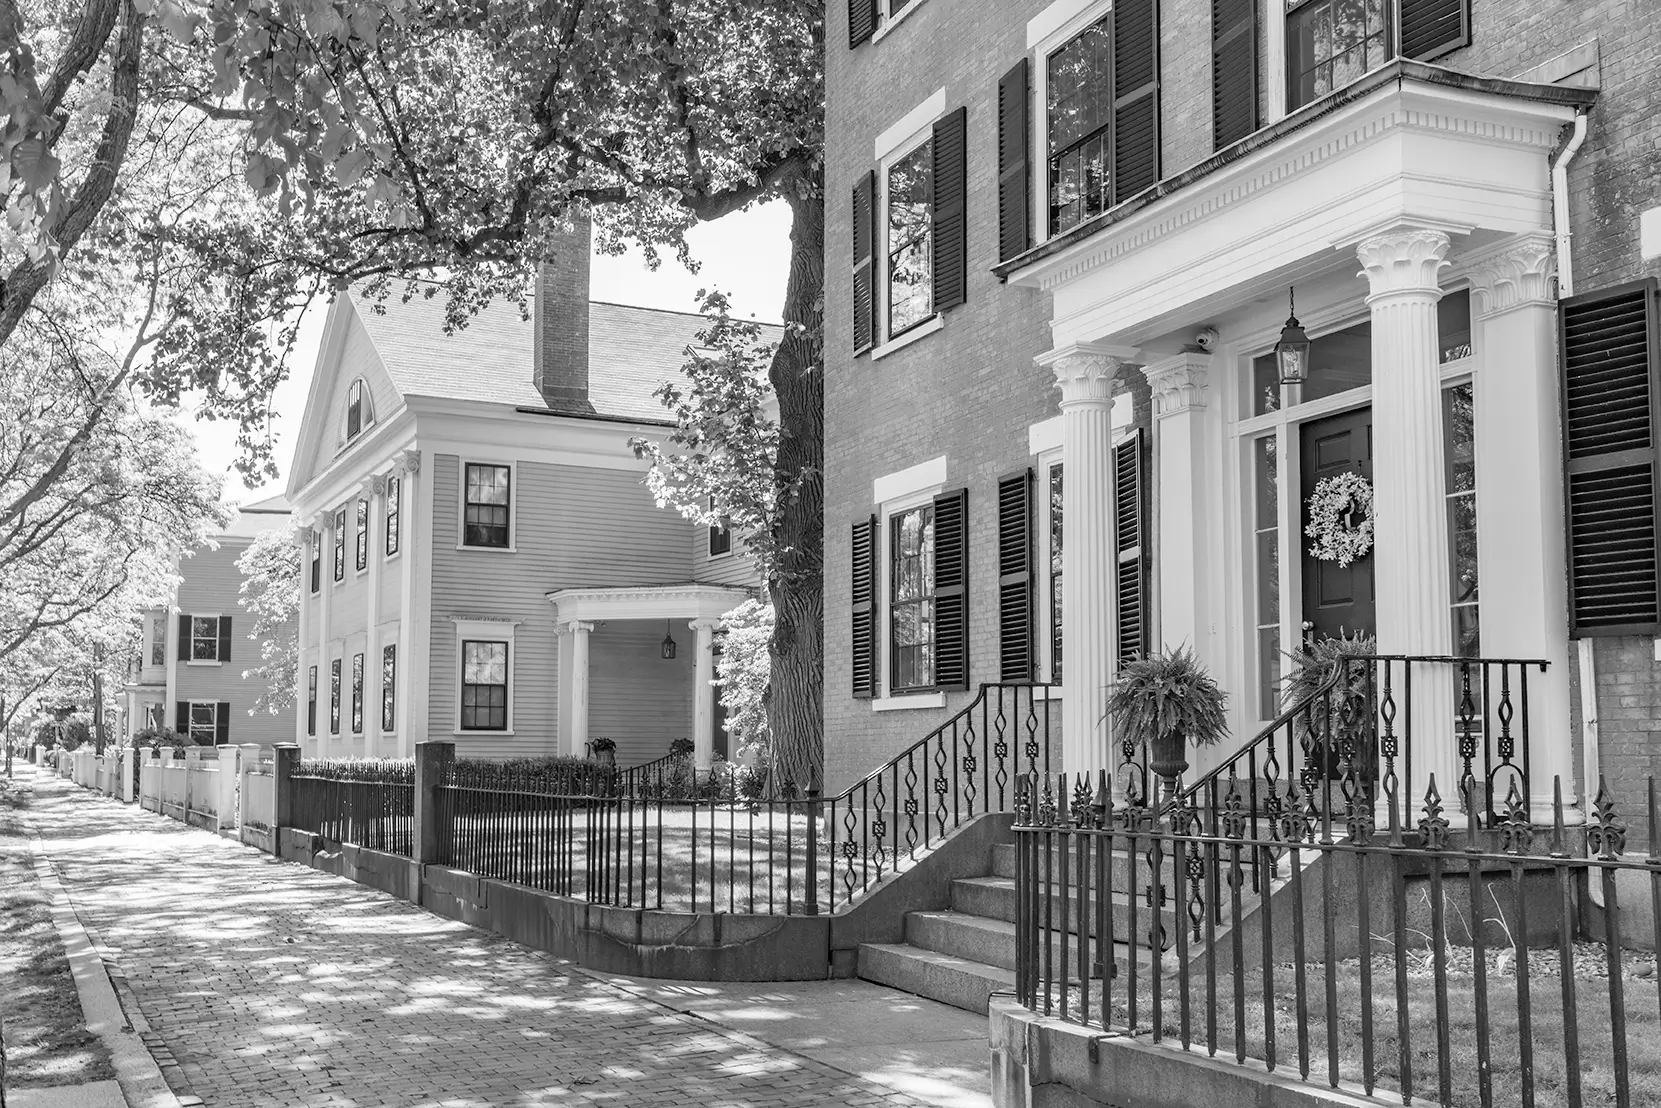 Colonial homes on a brick sidewalk street in Massachusetts